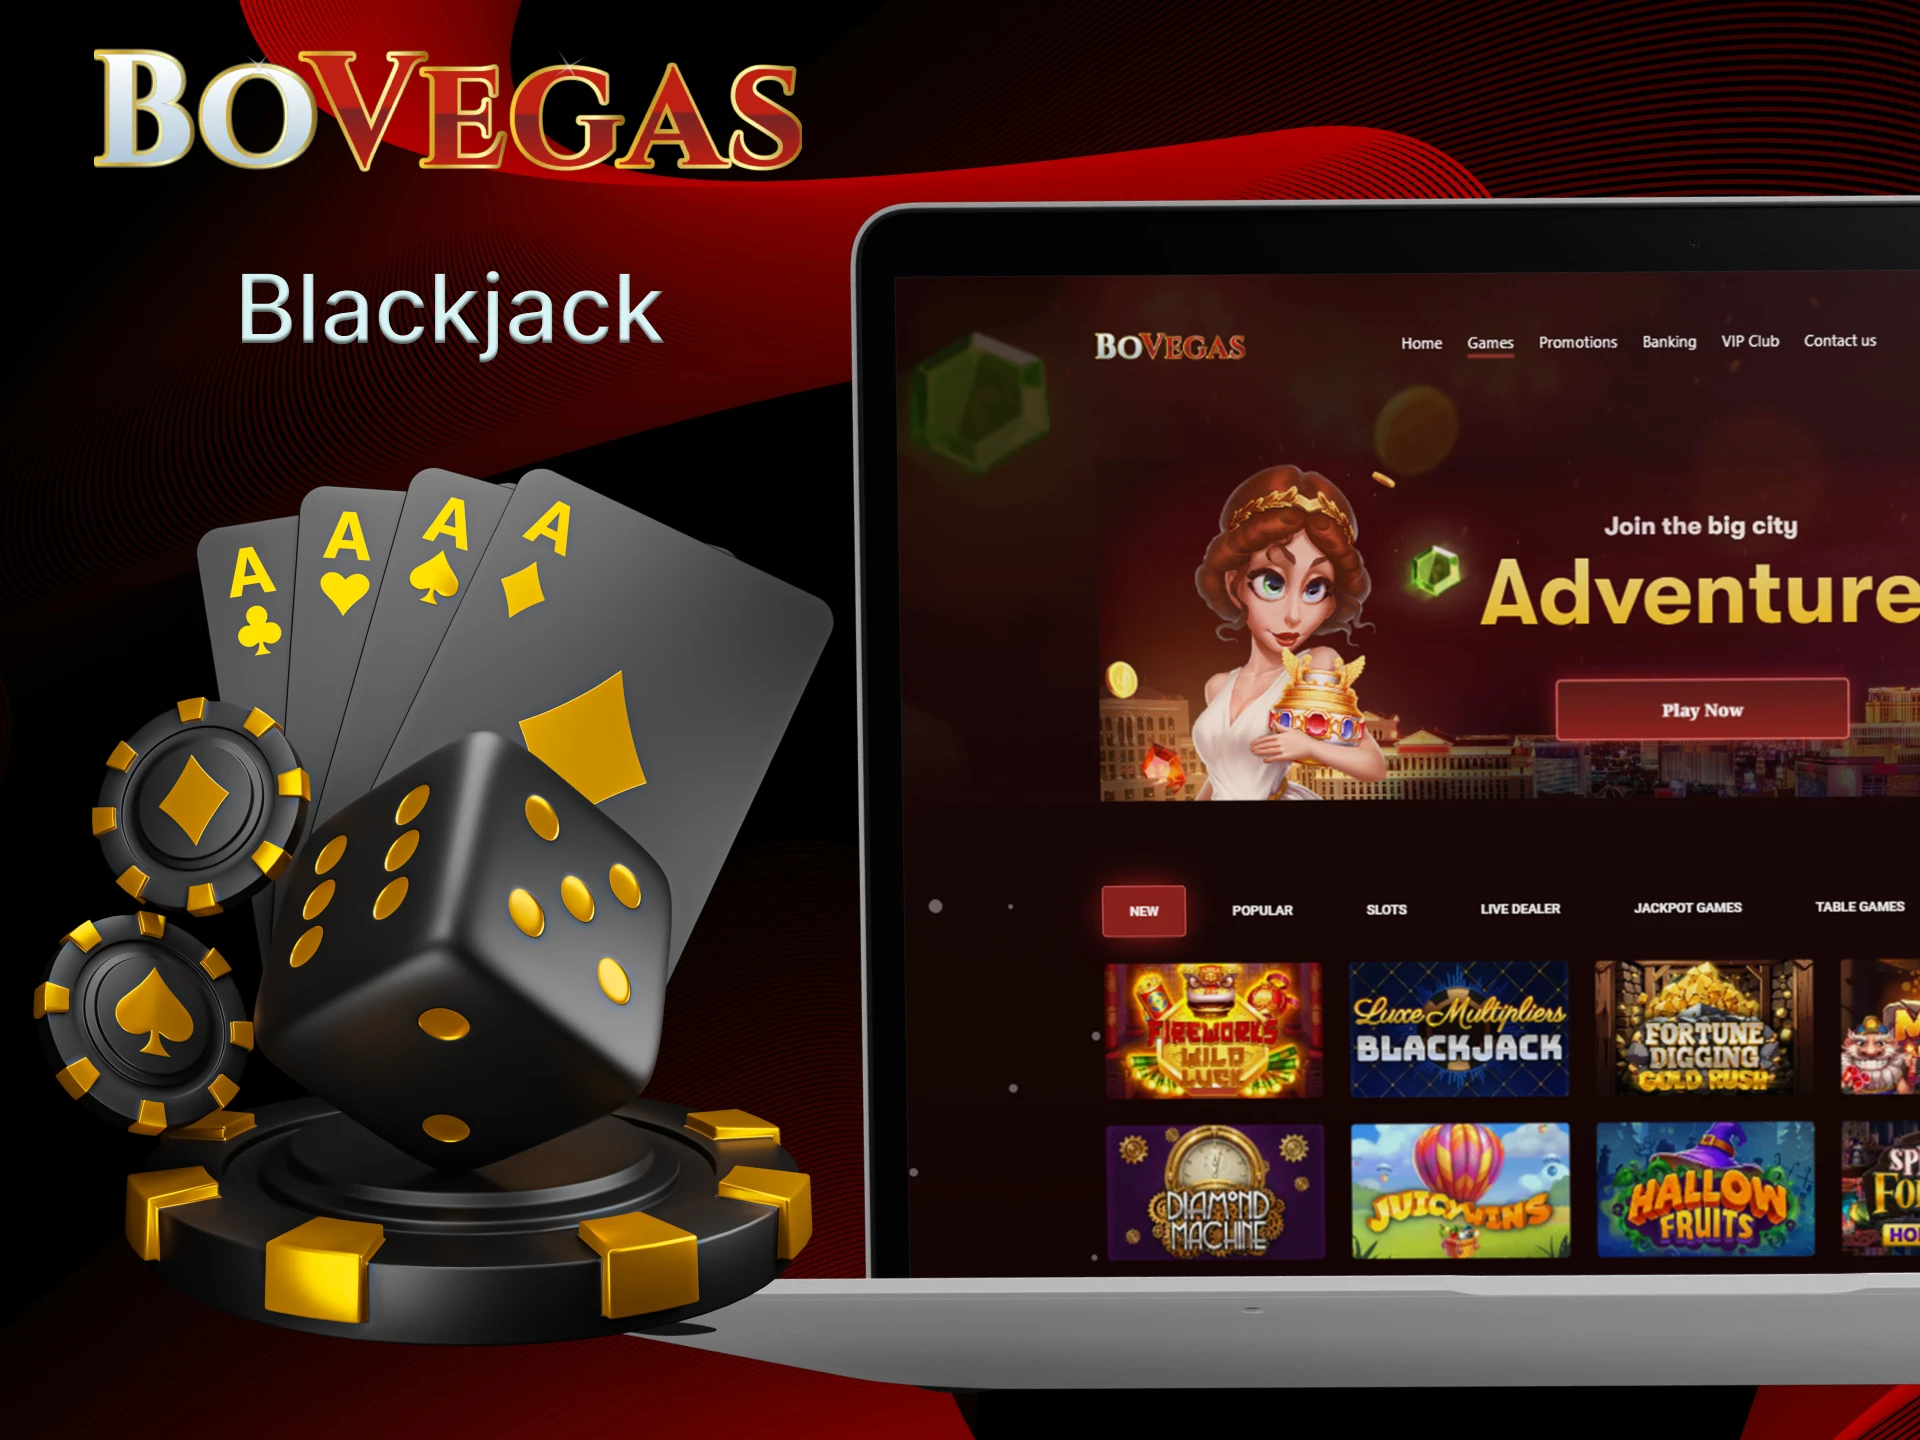 Play Blackjack on BoVegas Casino if you like card games.